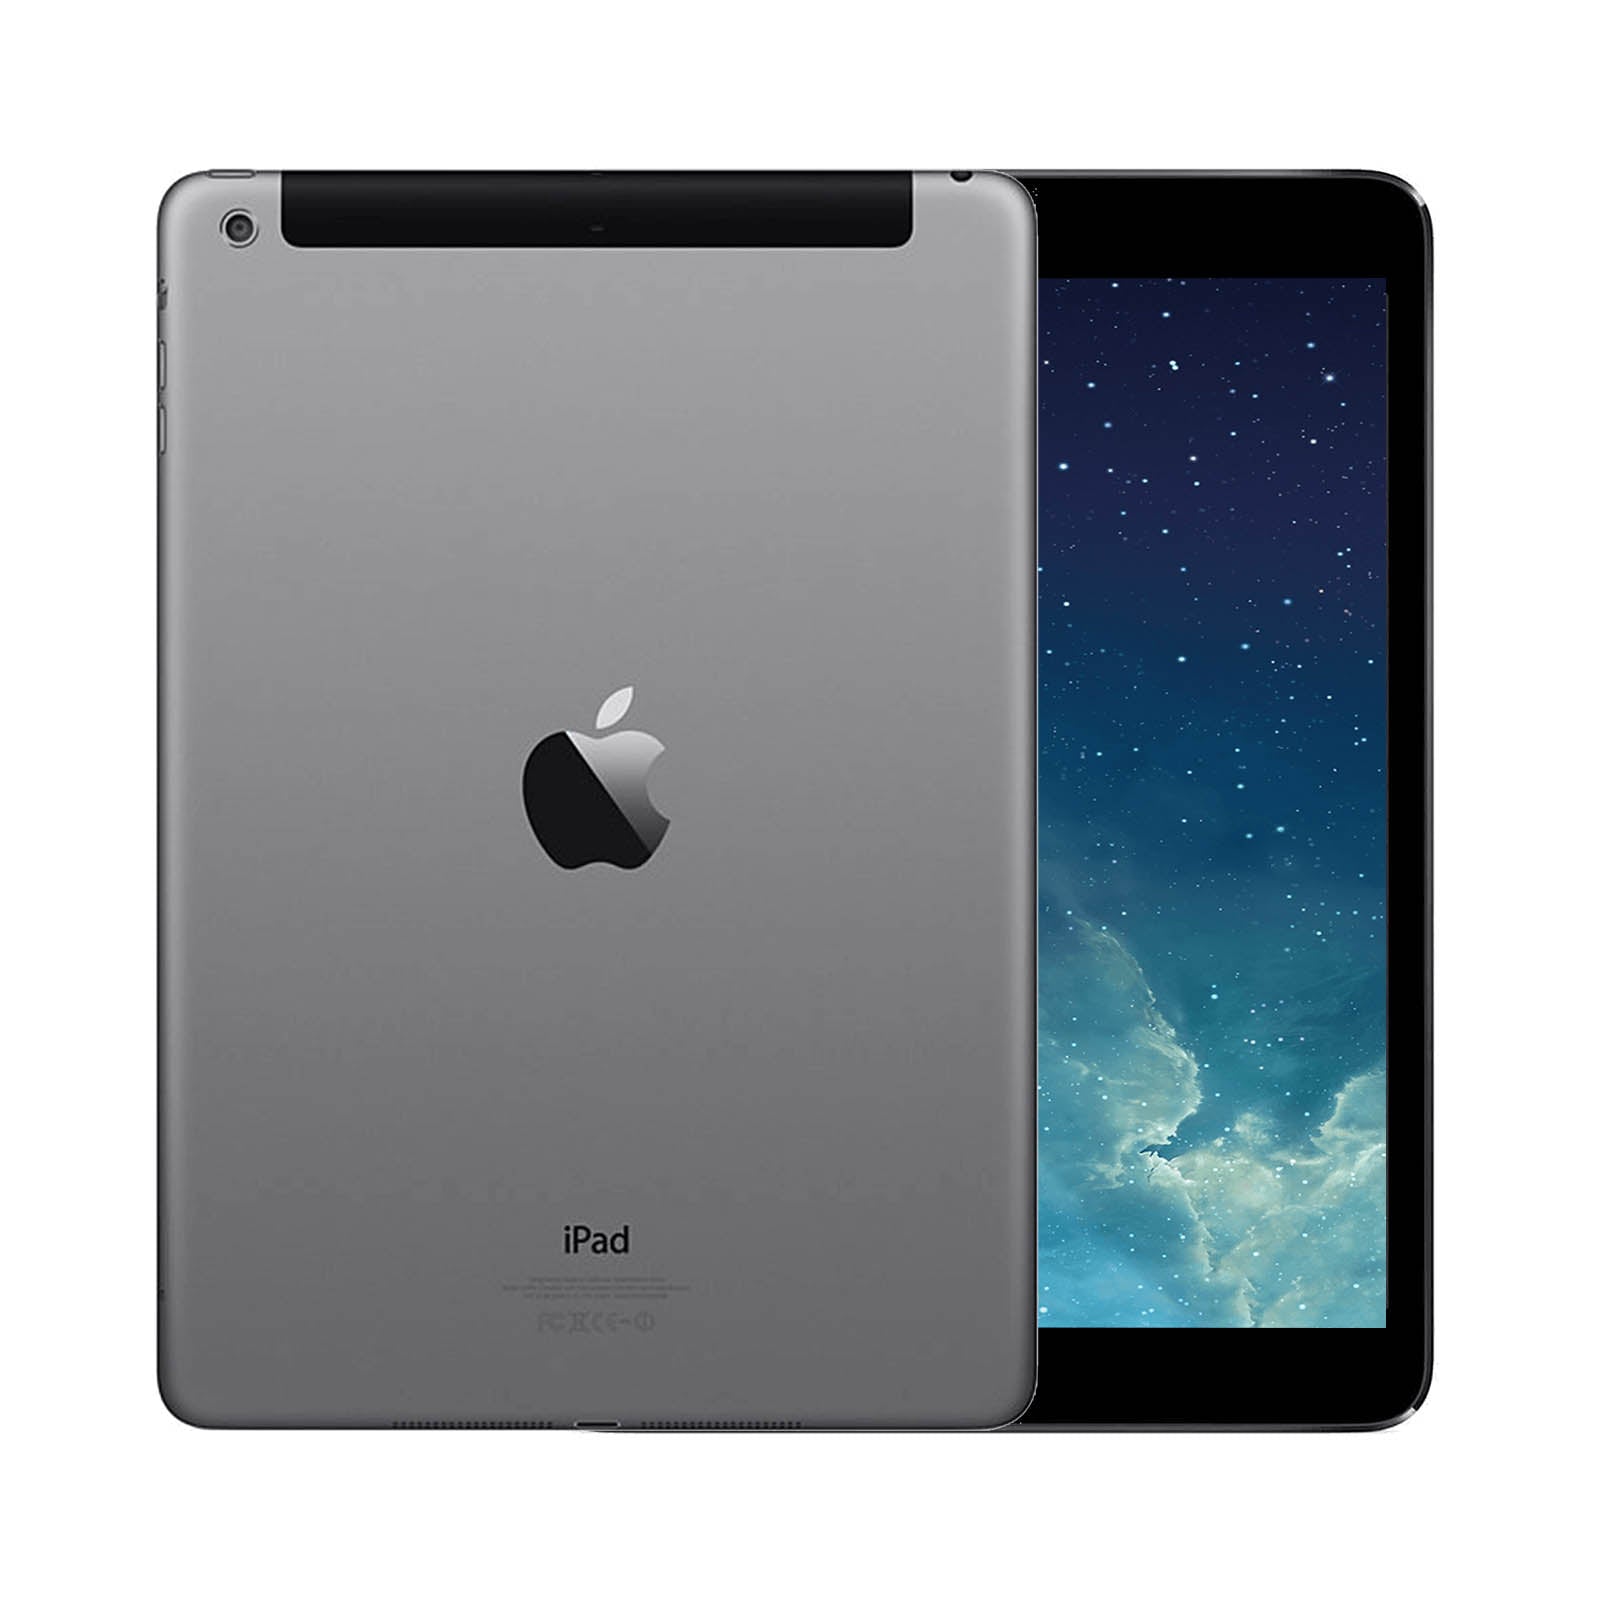 Apple iPad Air 128GB Space Grey Good - Unlocked